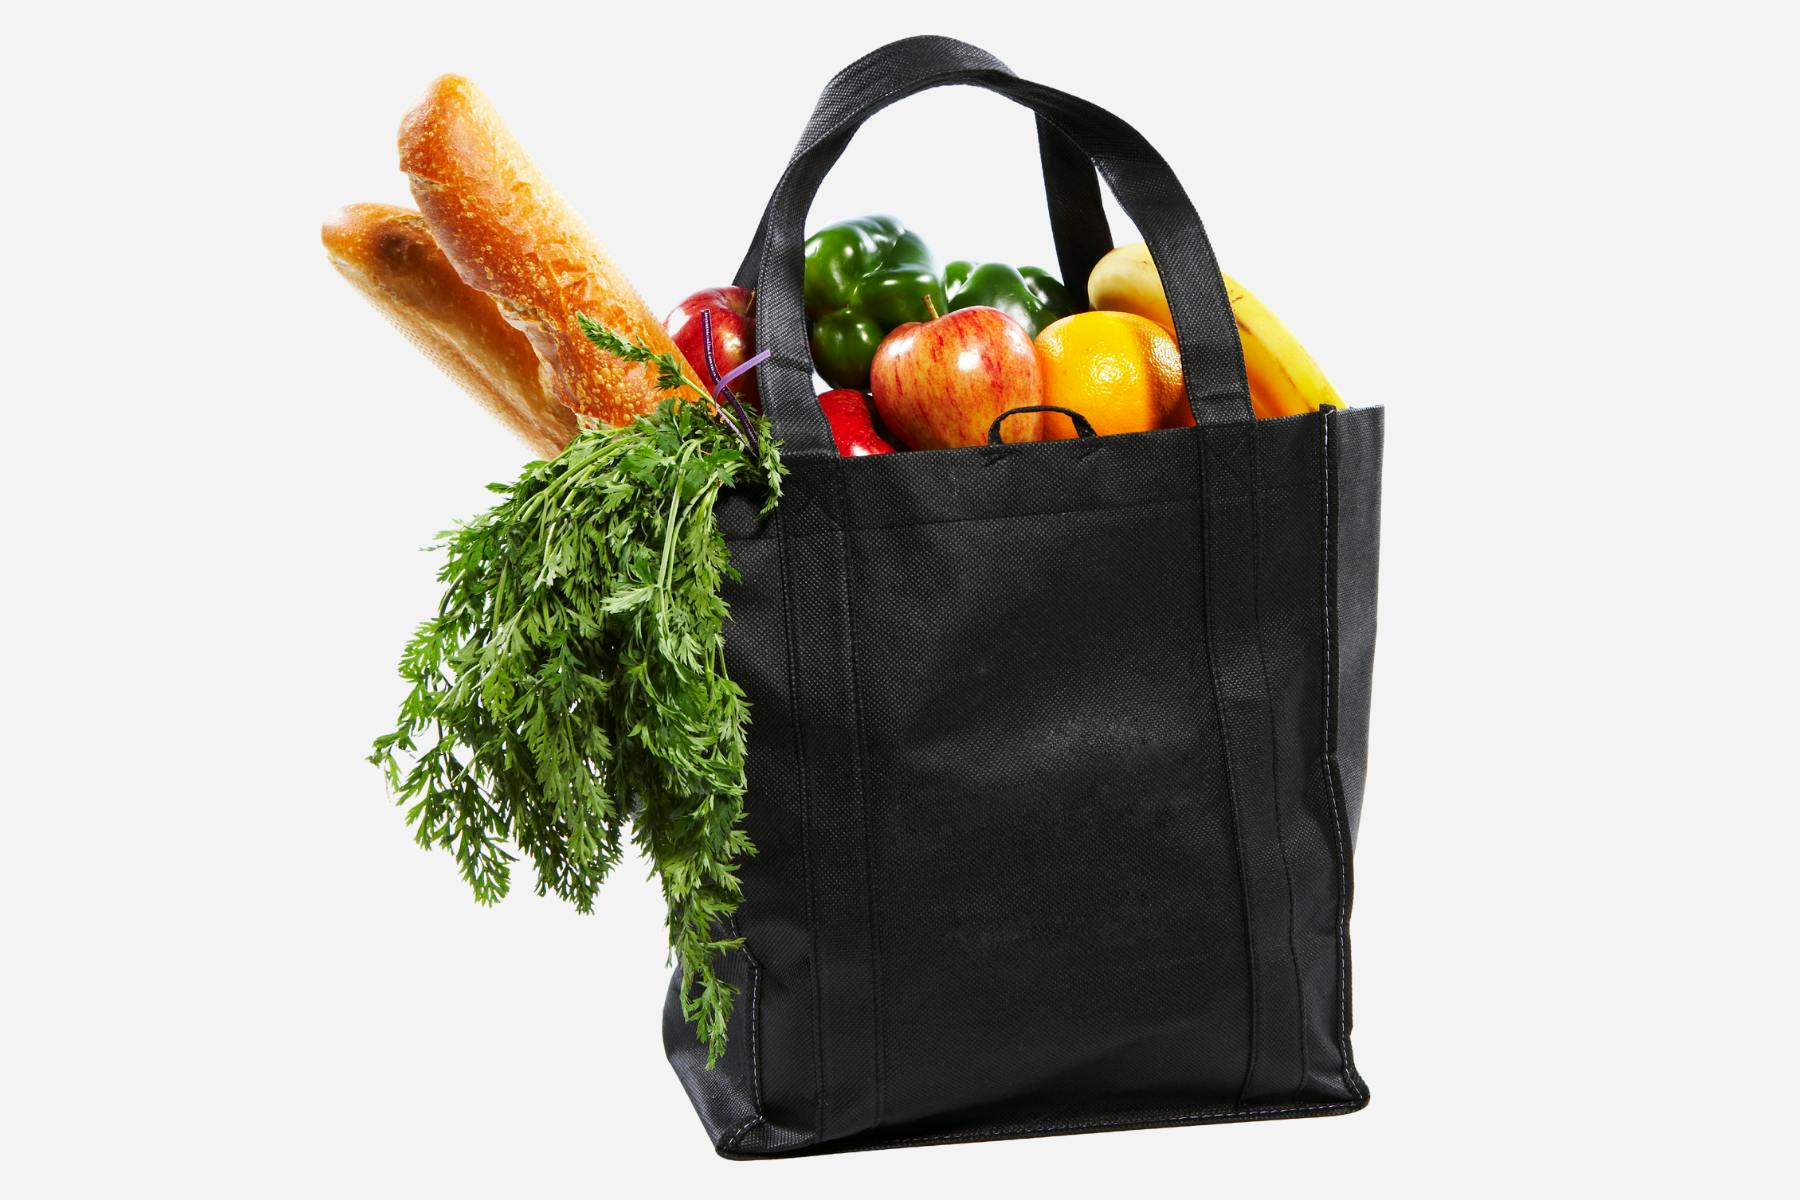 Reusable grocery bag full of food